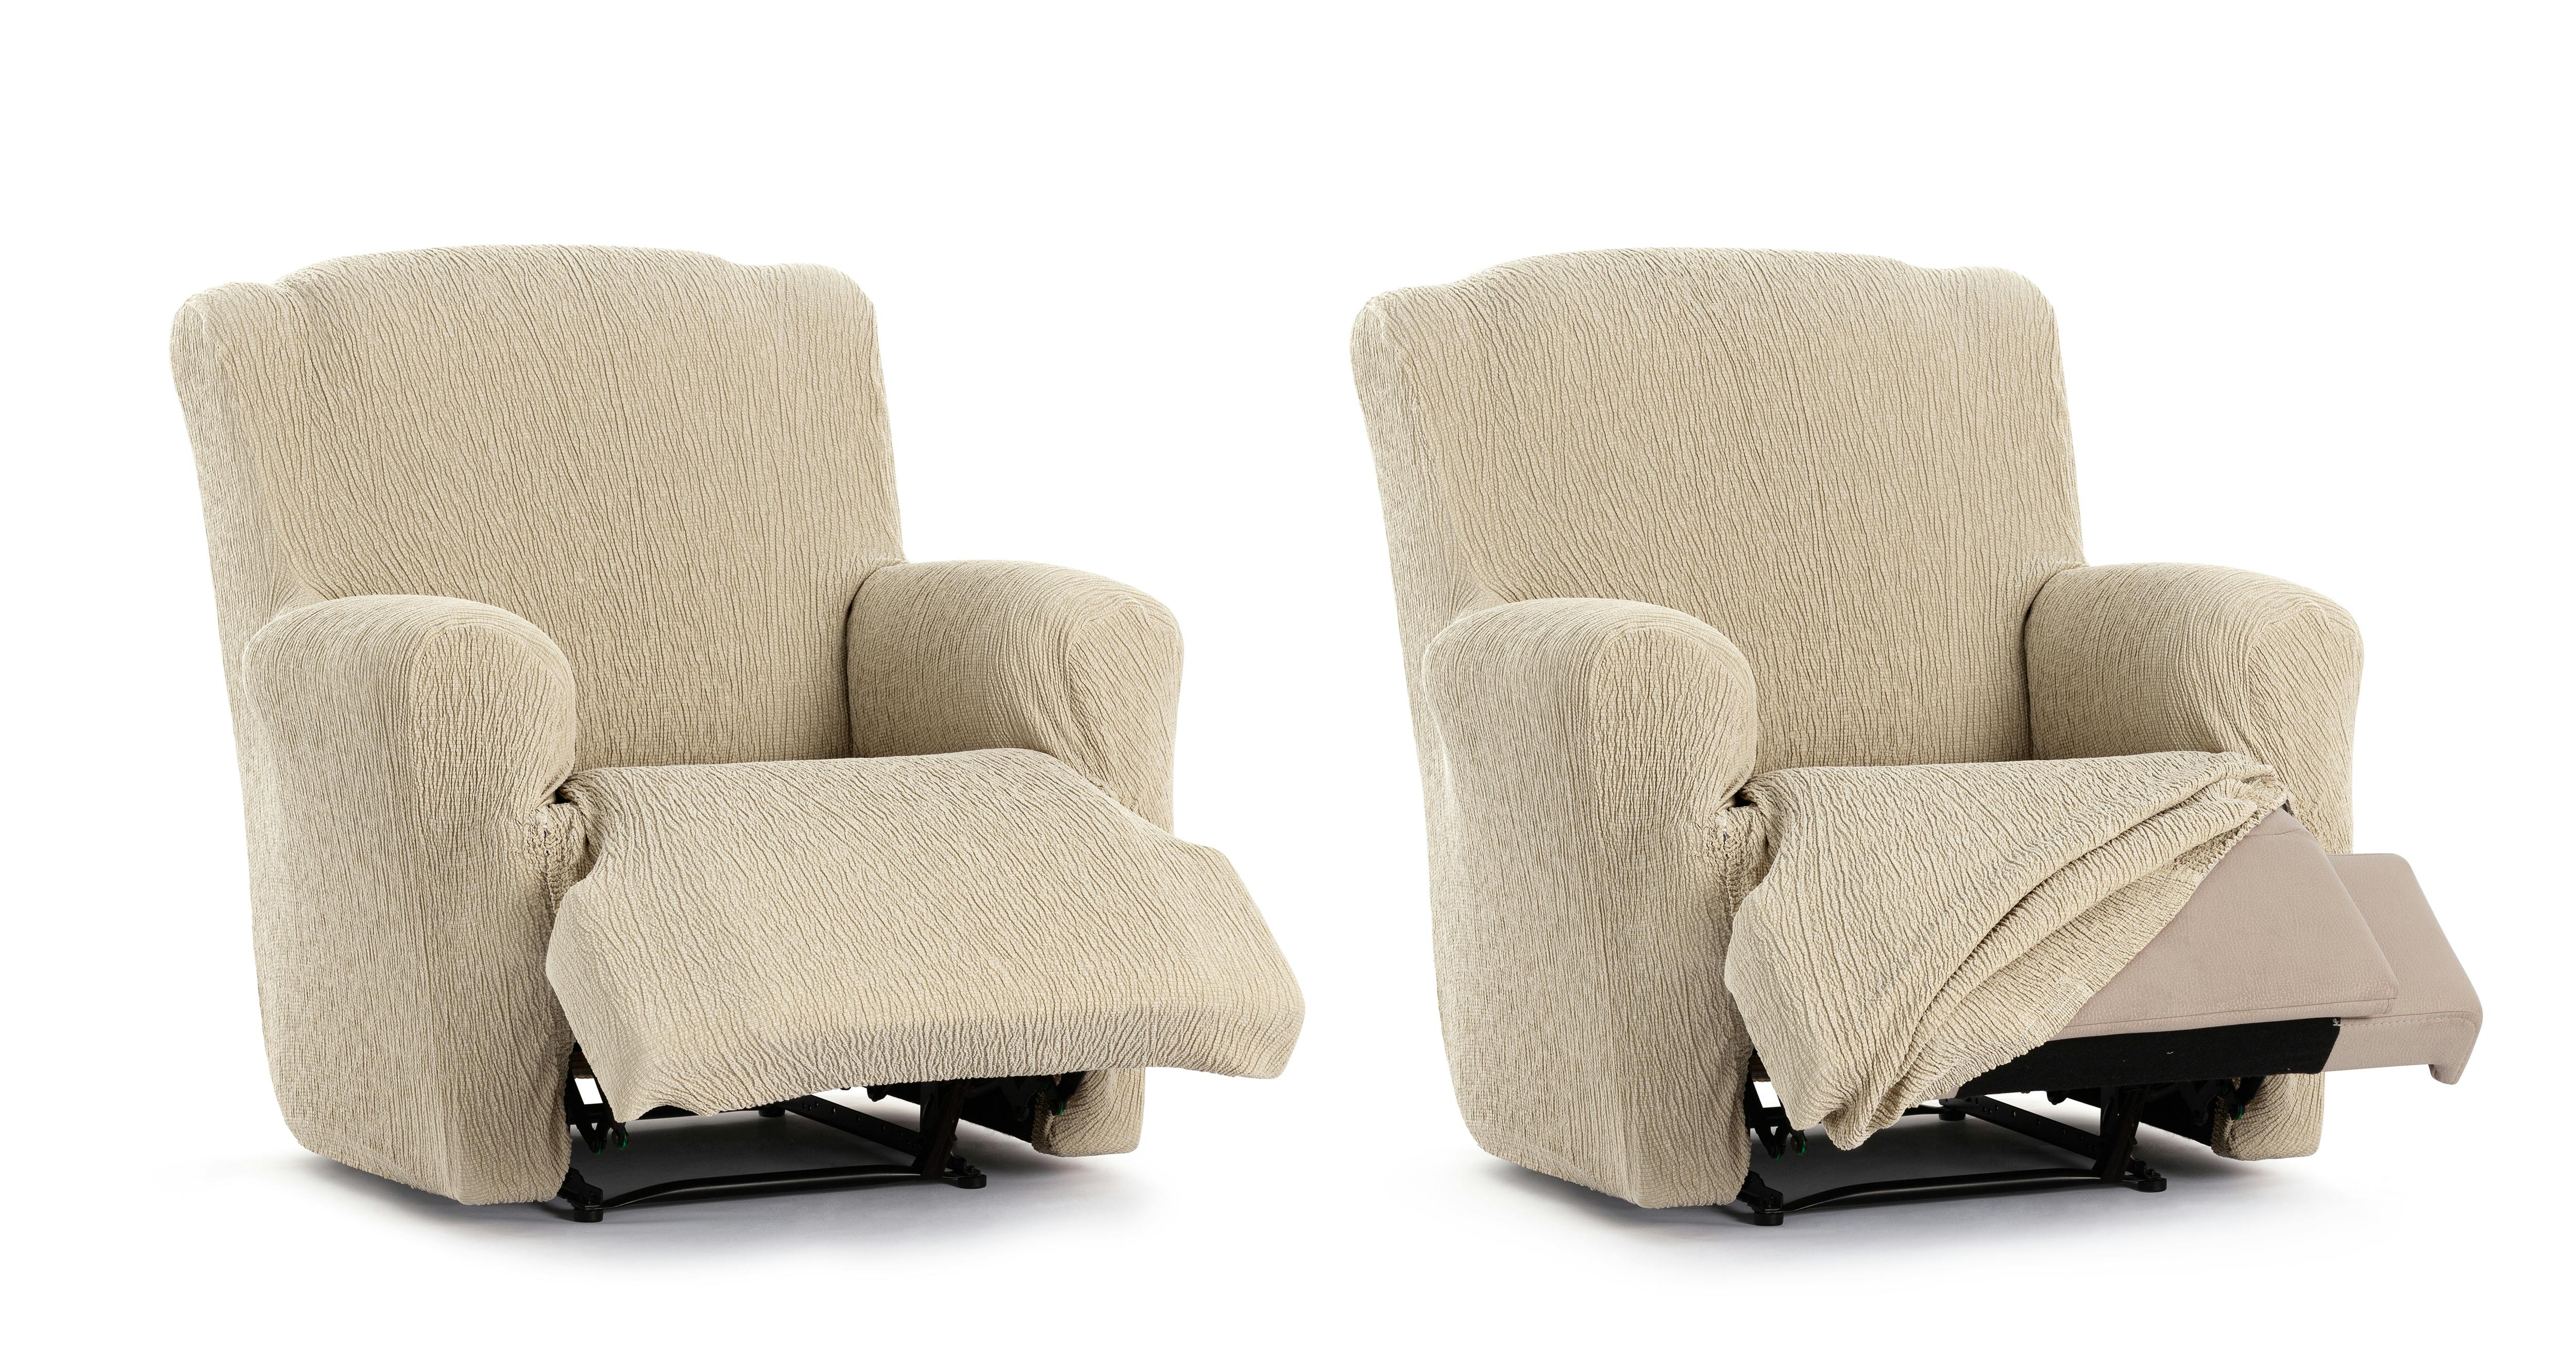 funda elastica para sofa 1,2,3,4 plazas relax pies juntos CLIC CLAC orejero